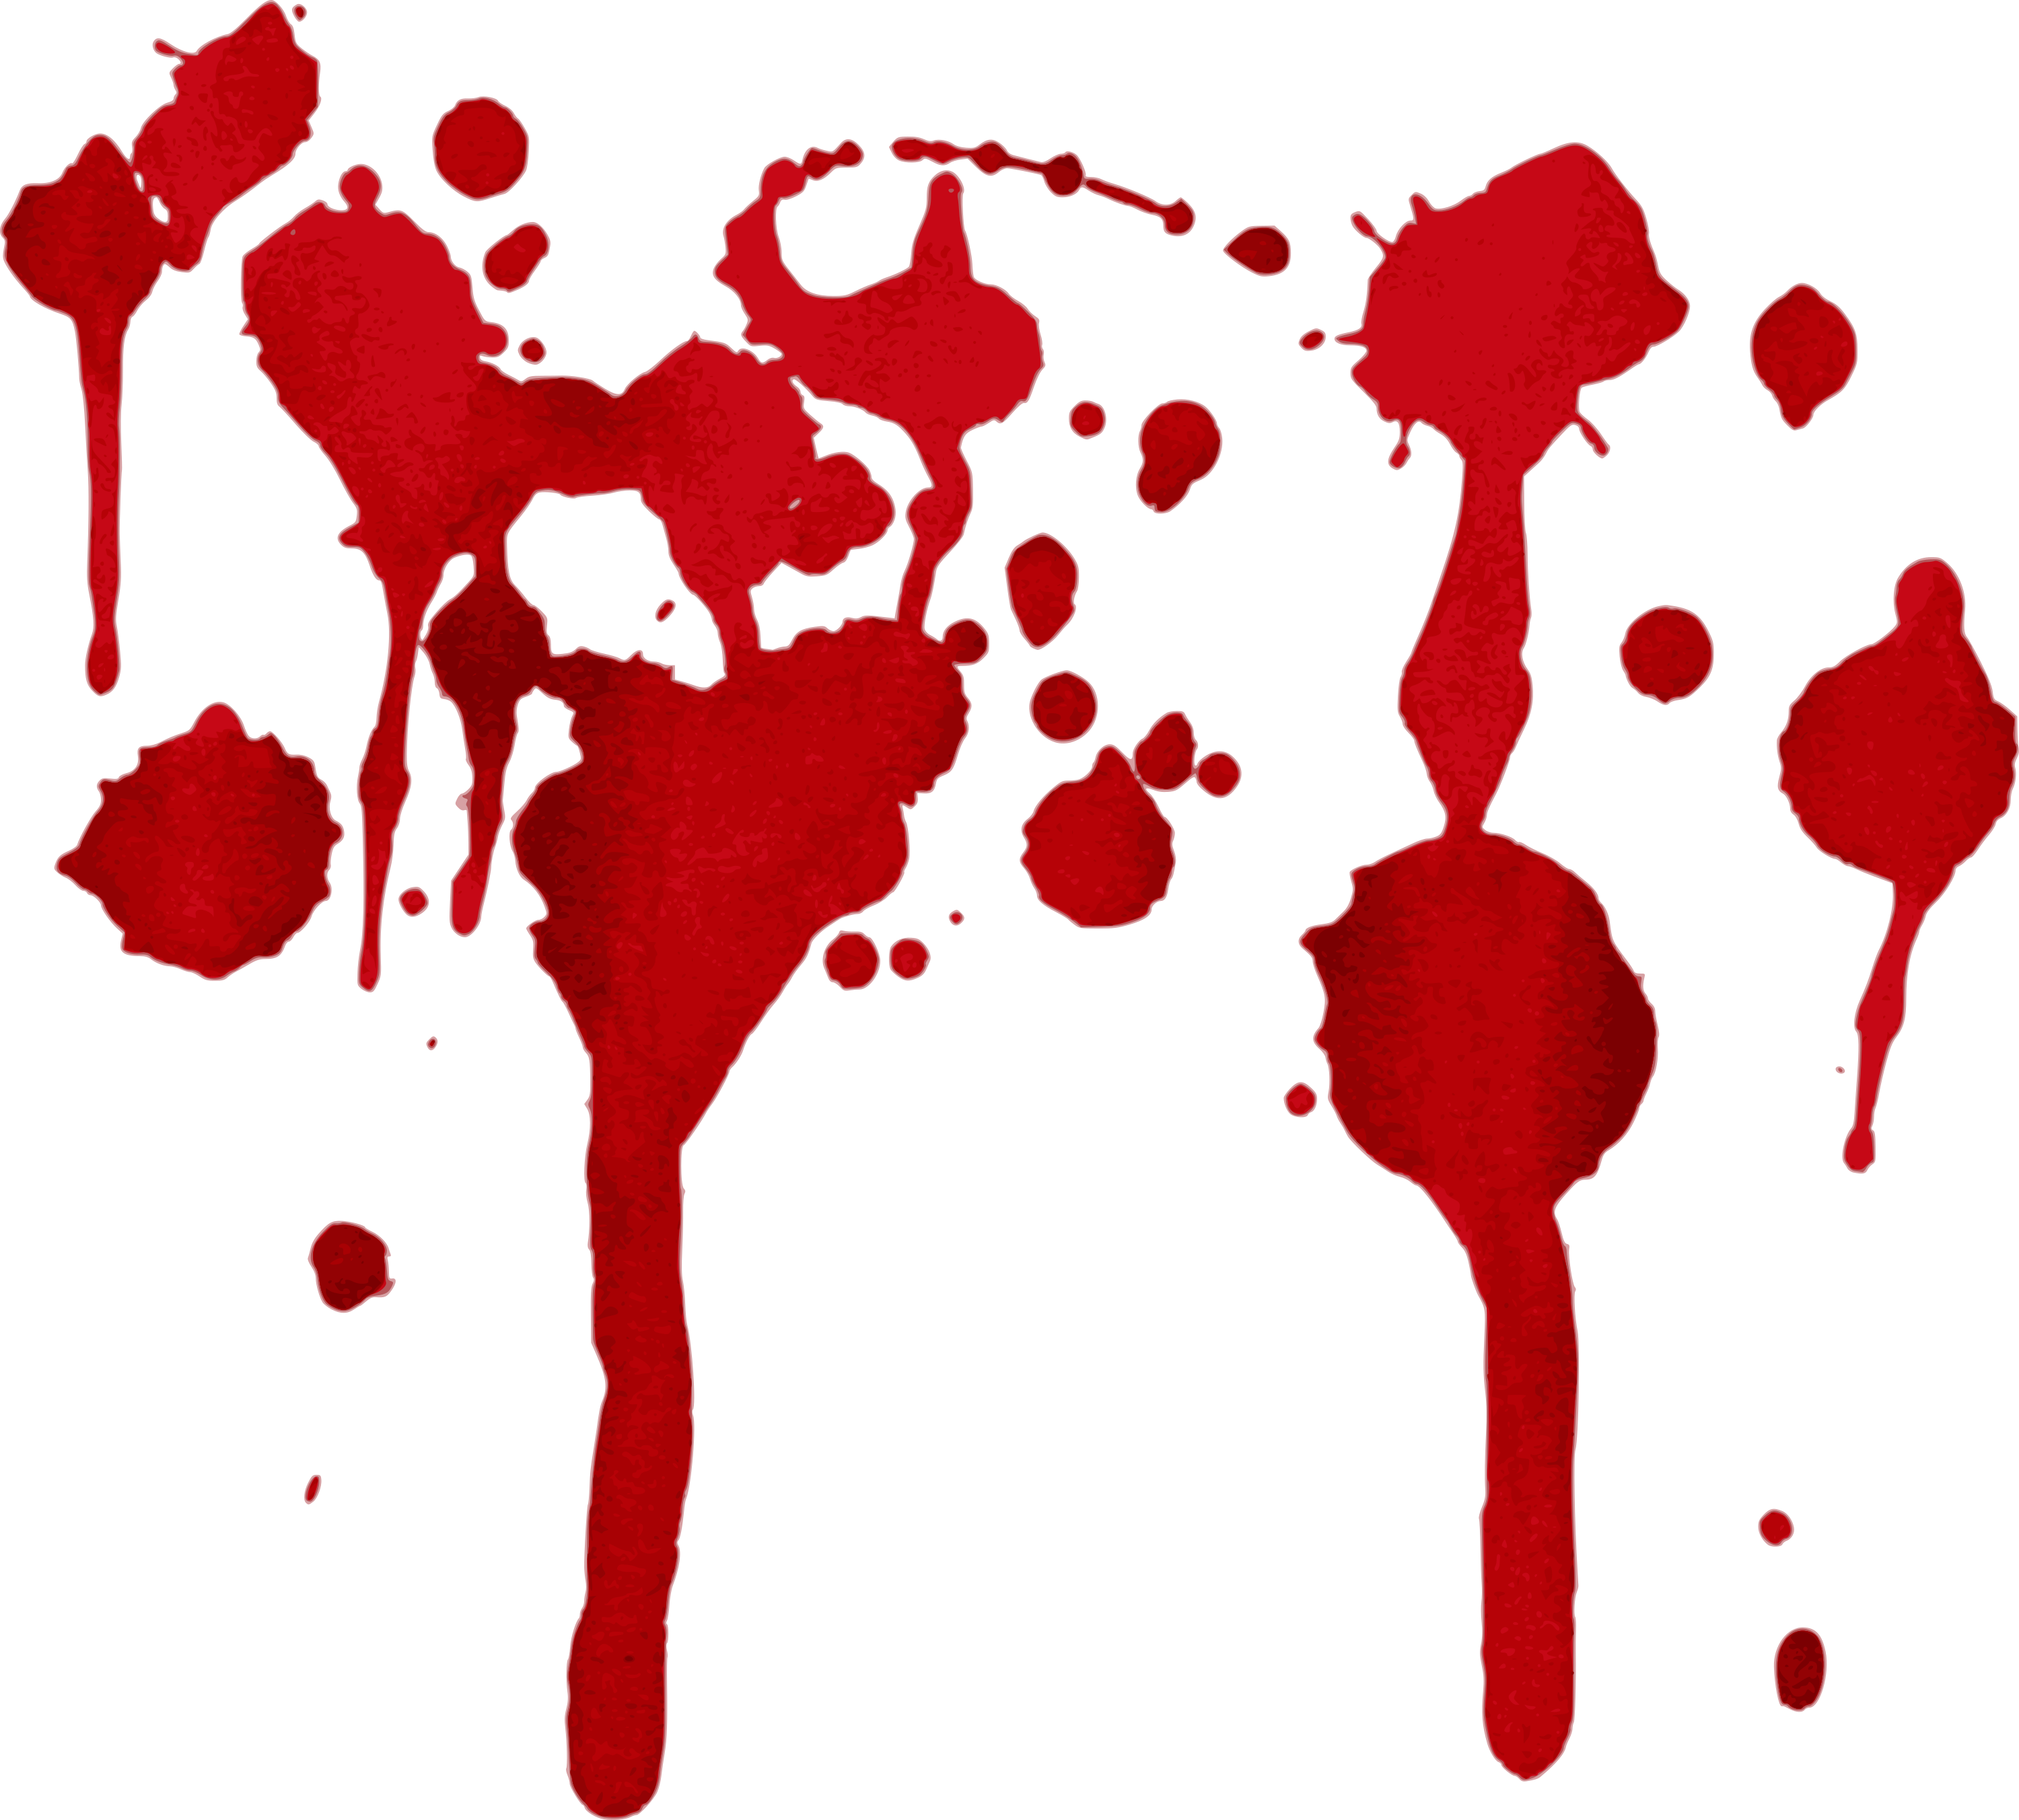 Blood Splatter Grunge PNG Free Download